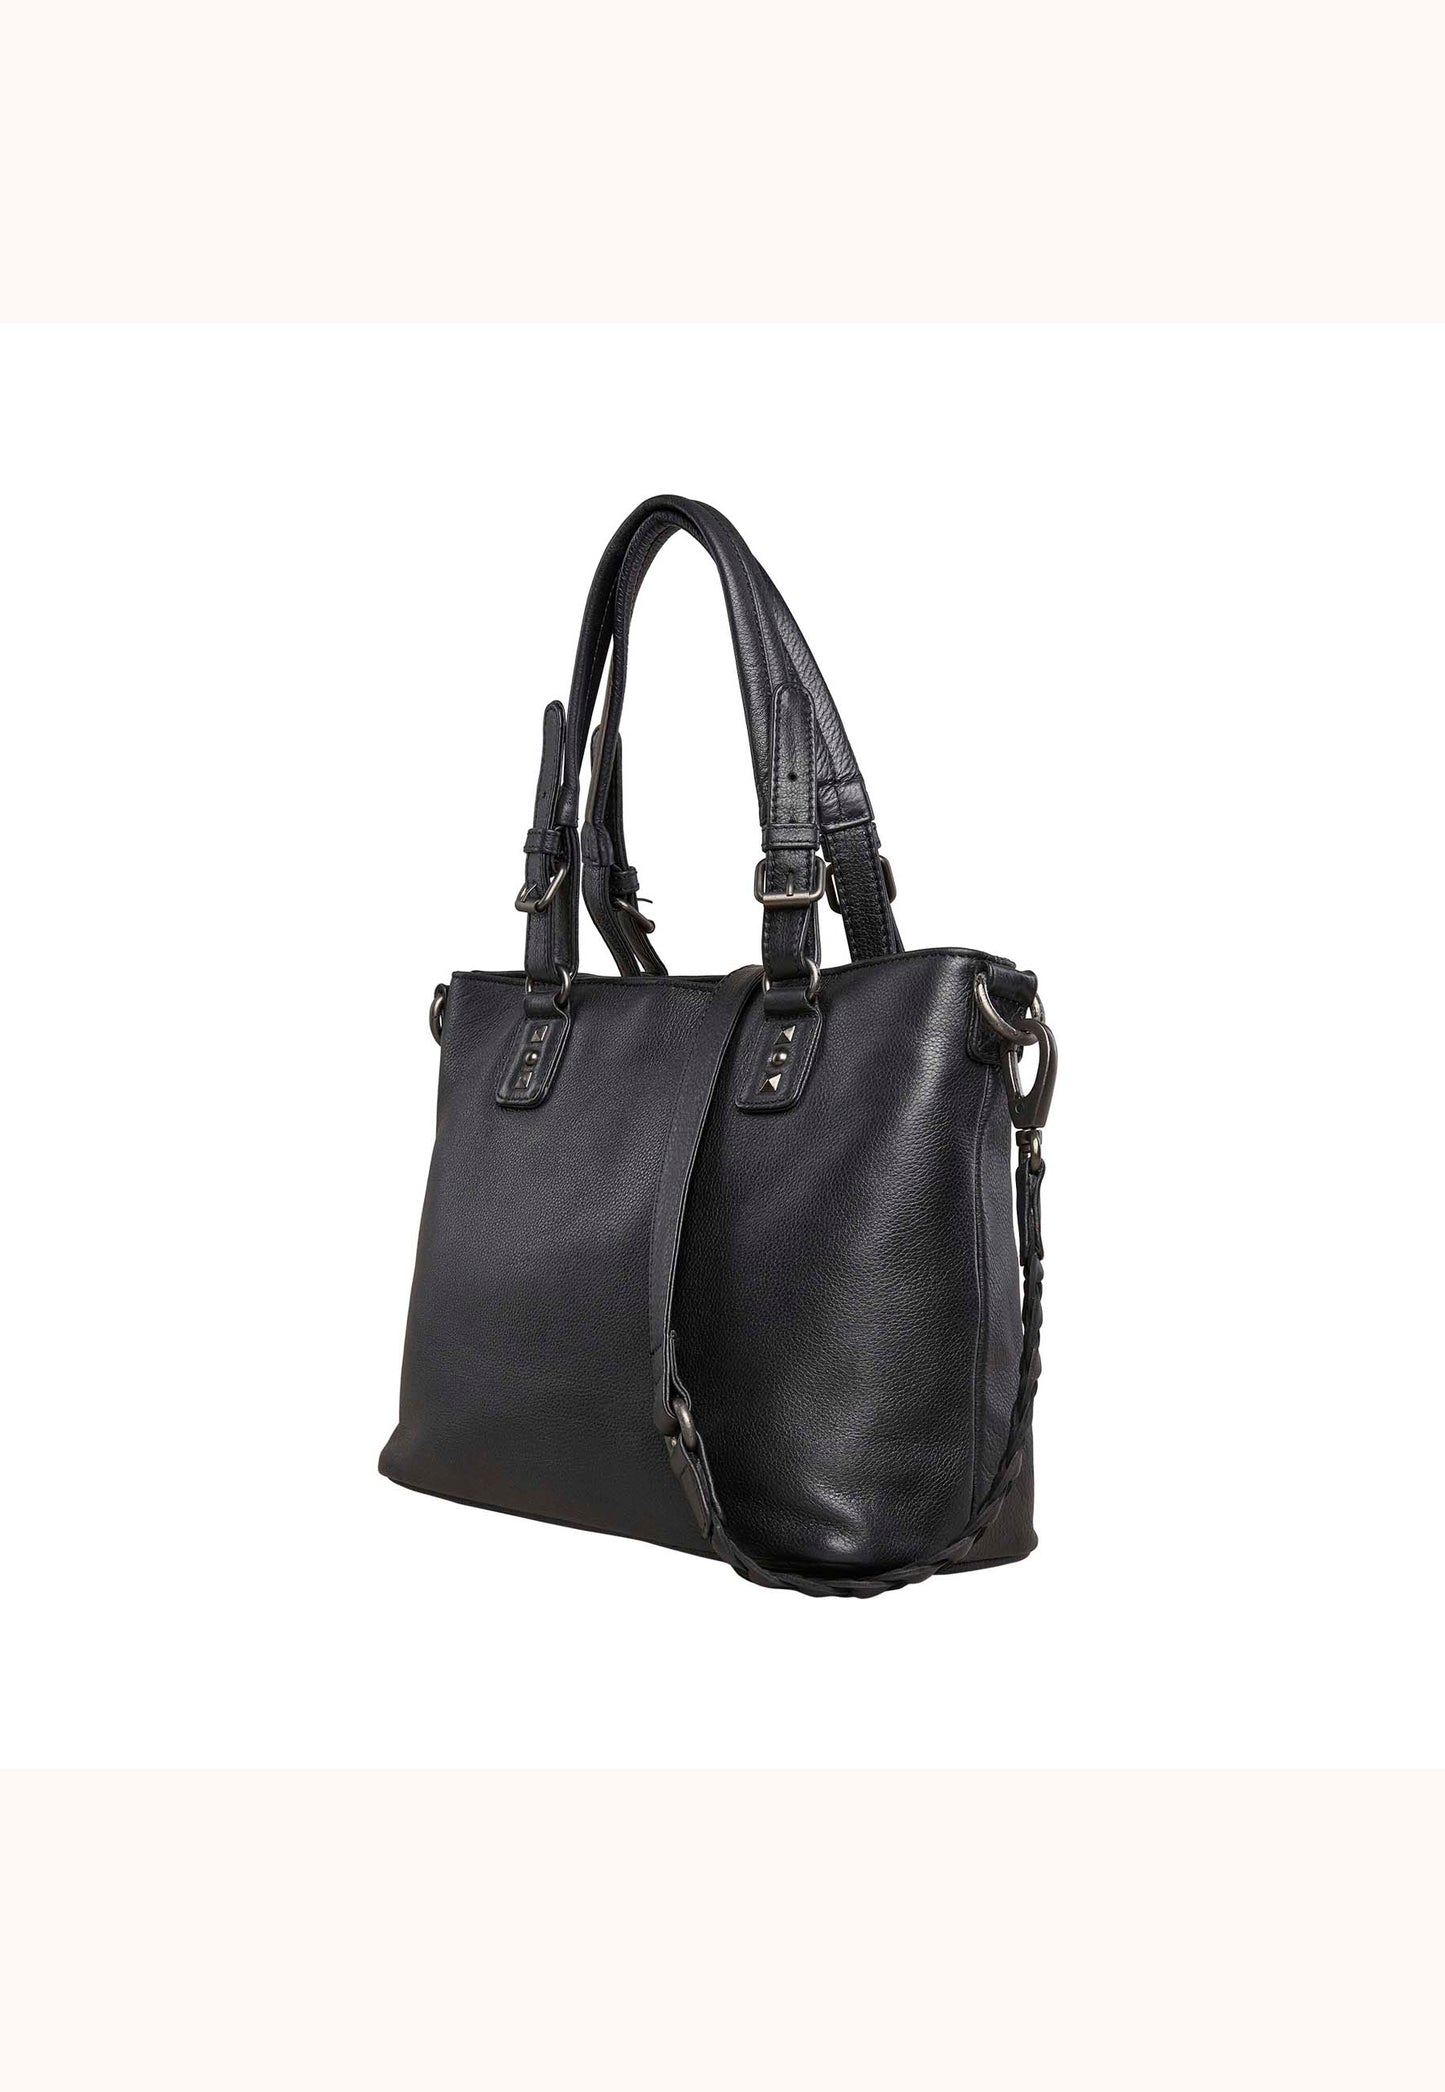 Ladies gun purse in black leather